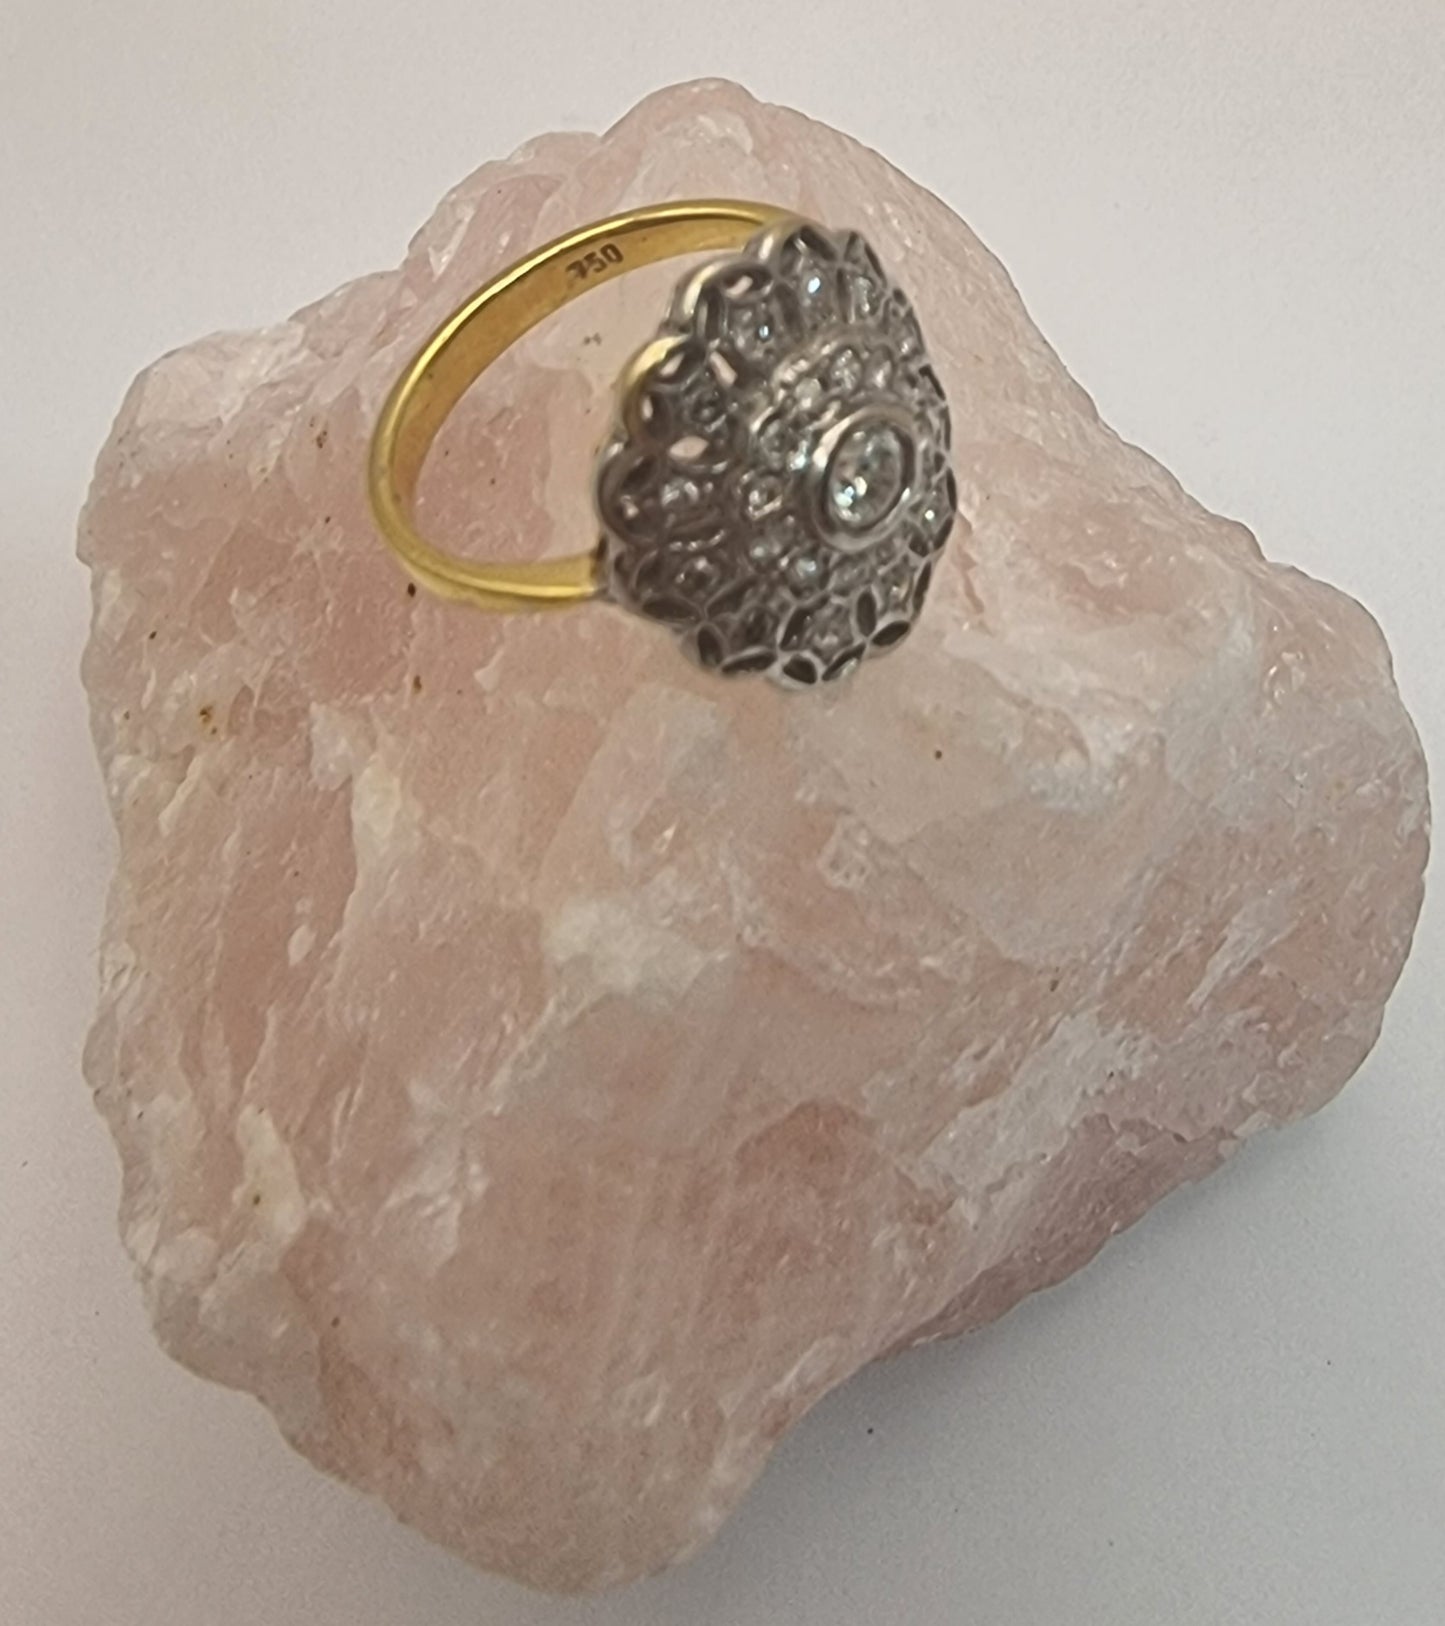 Vintage look clusterd diamond ring 18ct gold